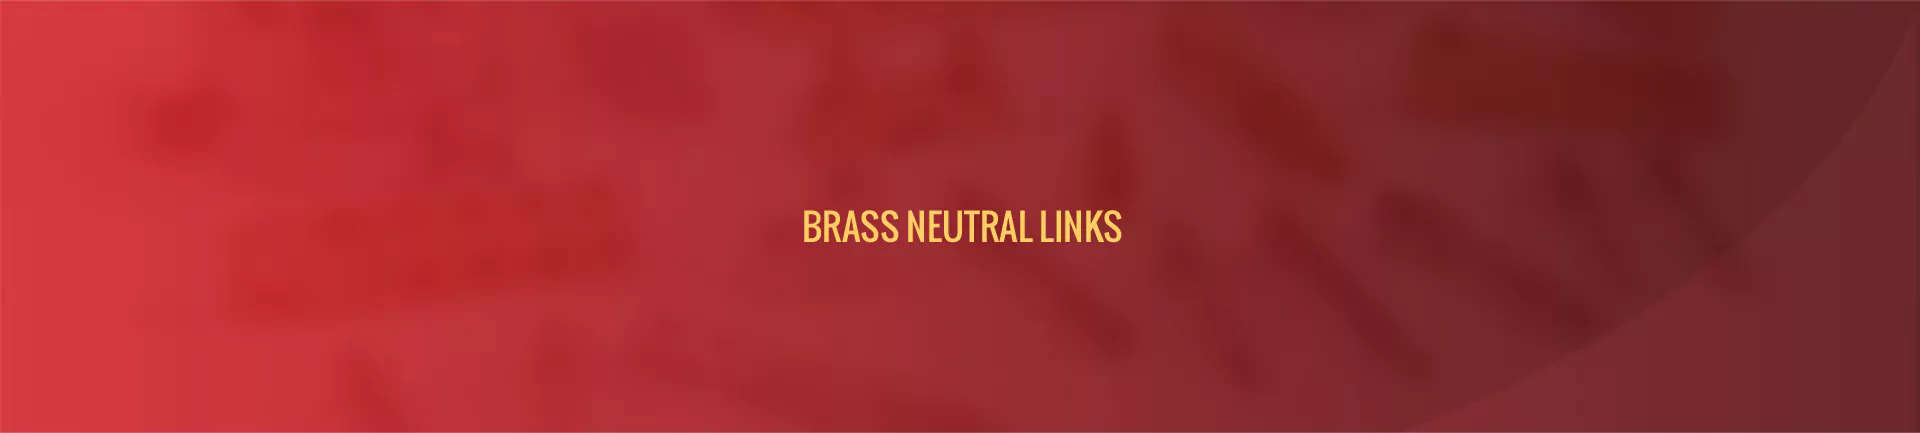 brass-neutral-links-banner